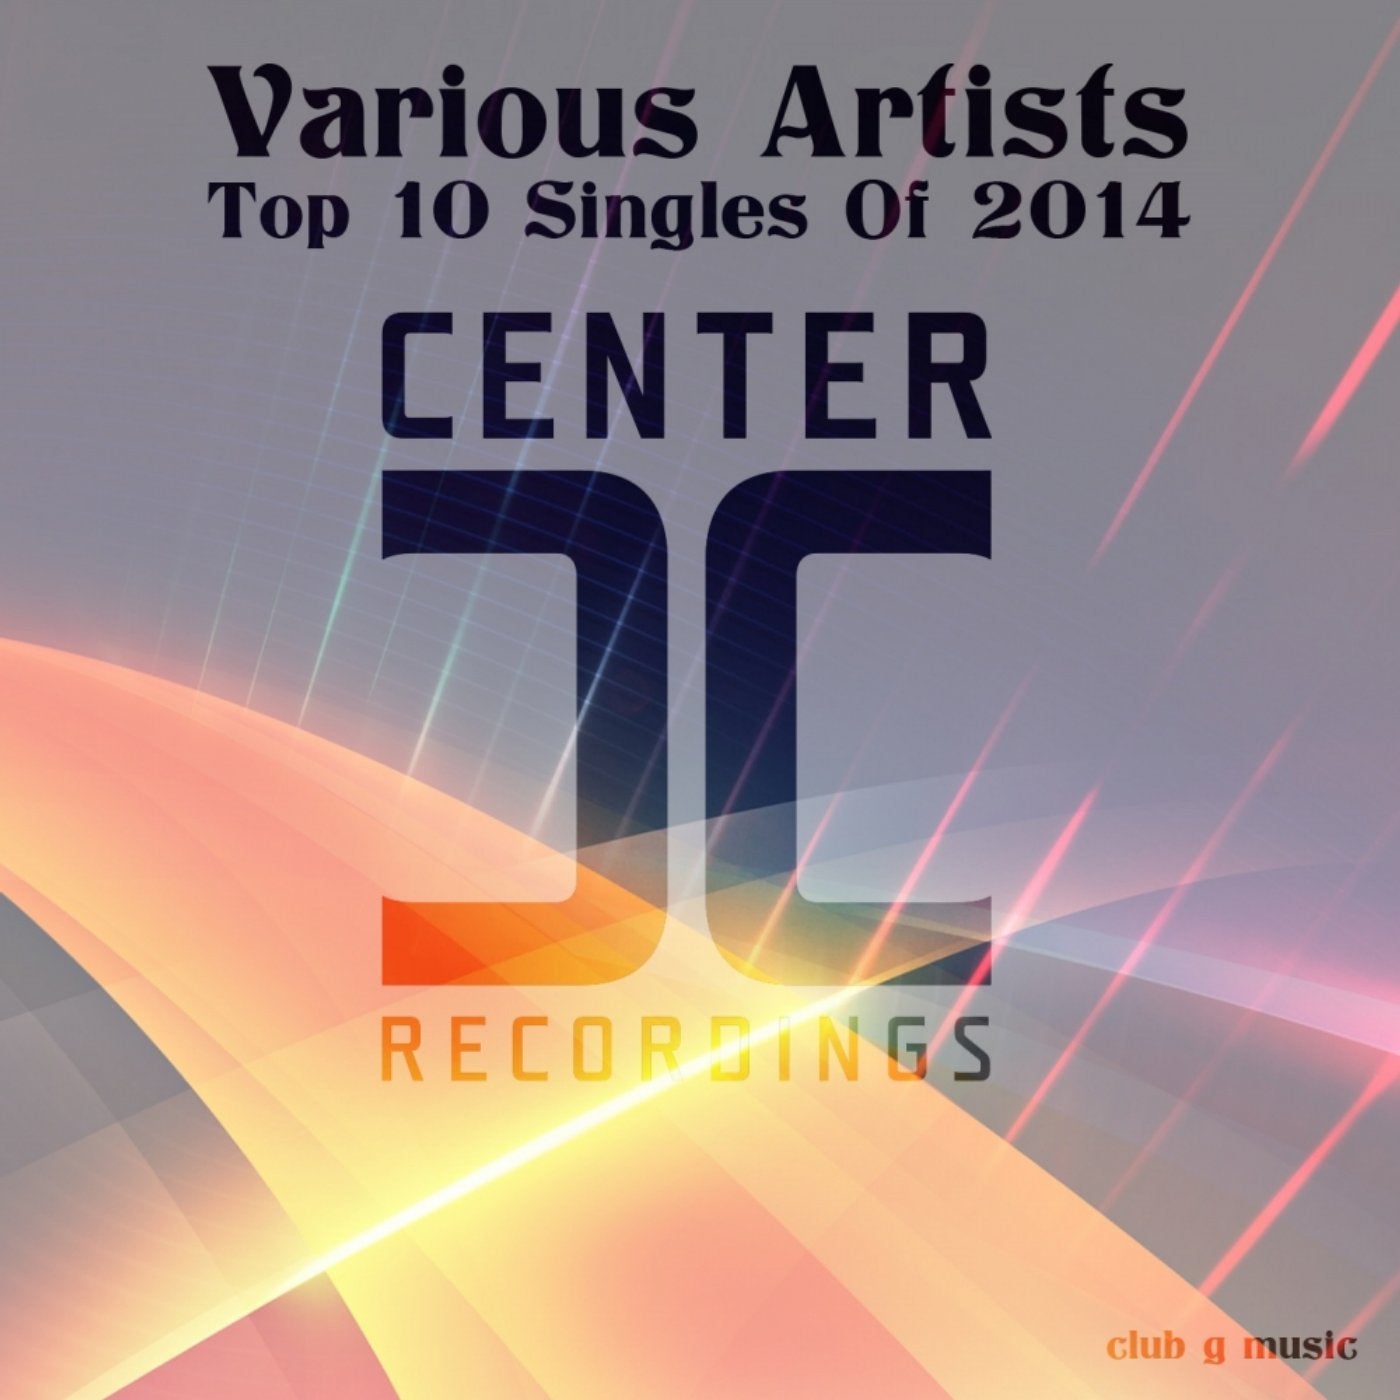 Top 10 Singles Of 2014